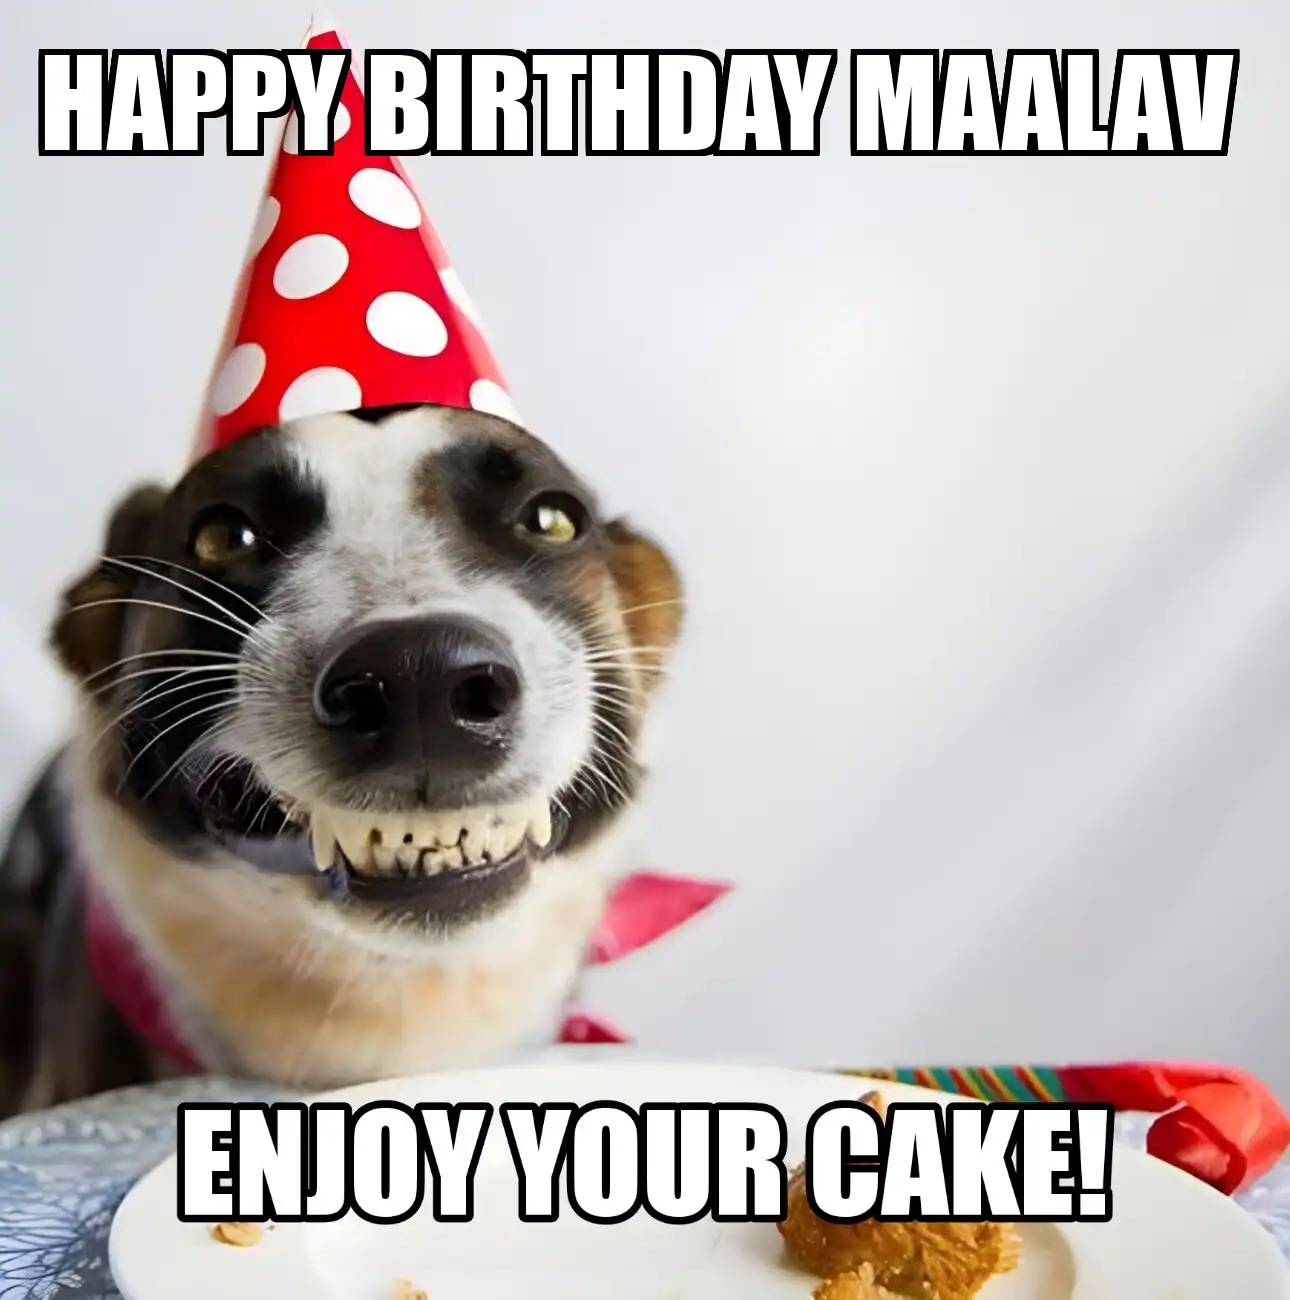 Happy Birthday Maalav Enjoy Your Cake Dog Meme